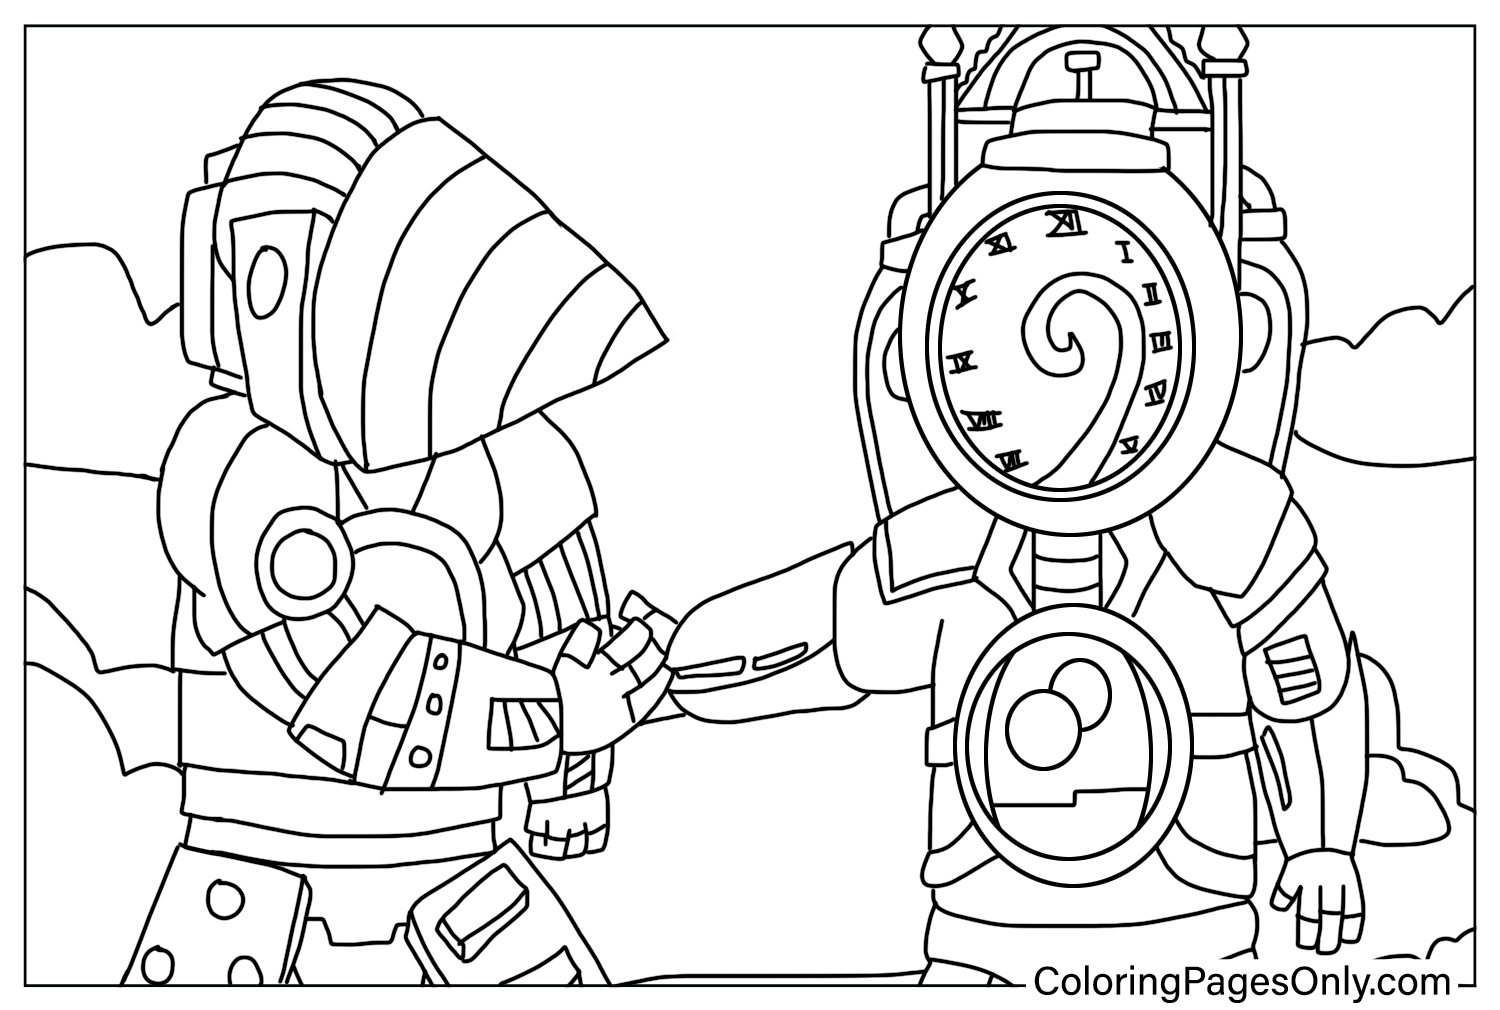 Páginas para colorir Titan ClockMan e Titan Drillman de Titan Clock Man